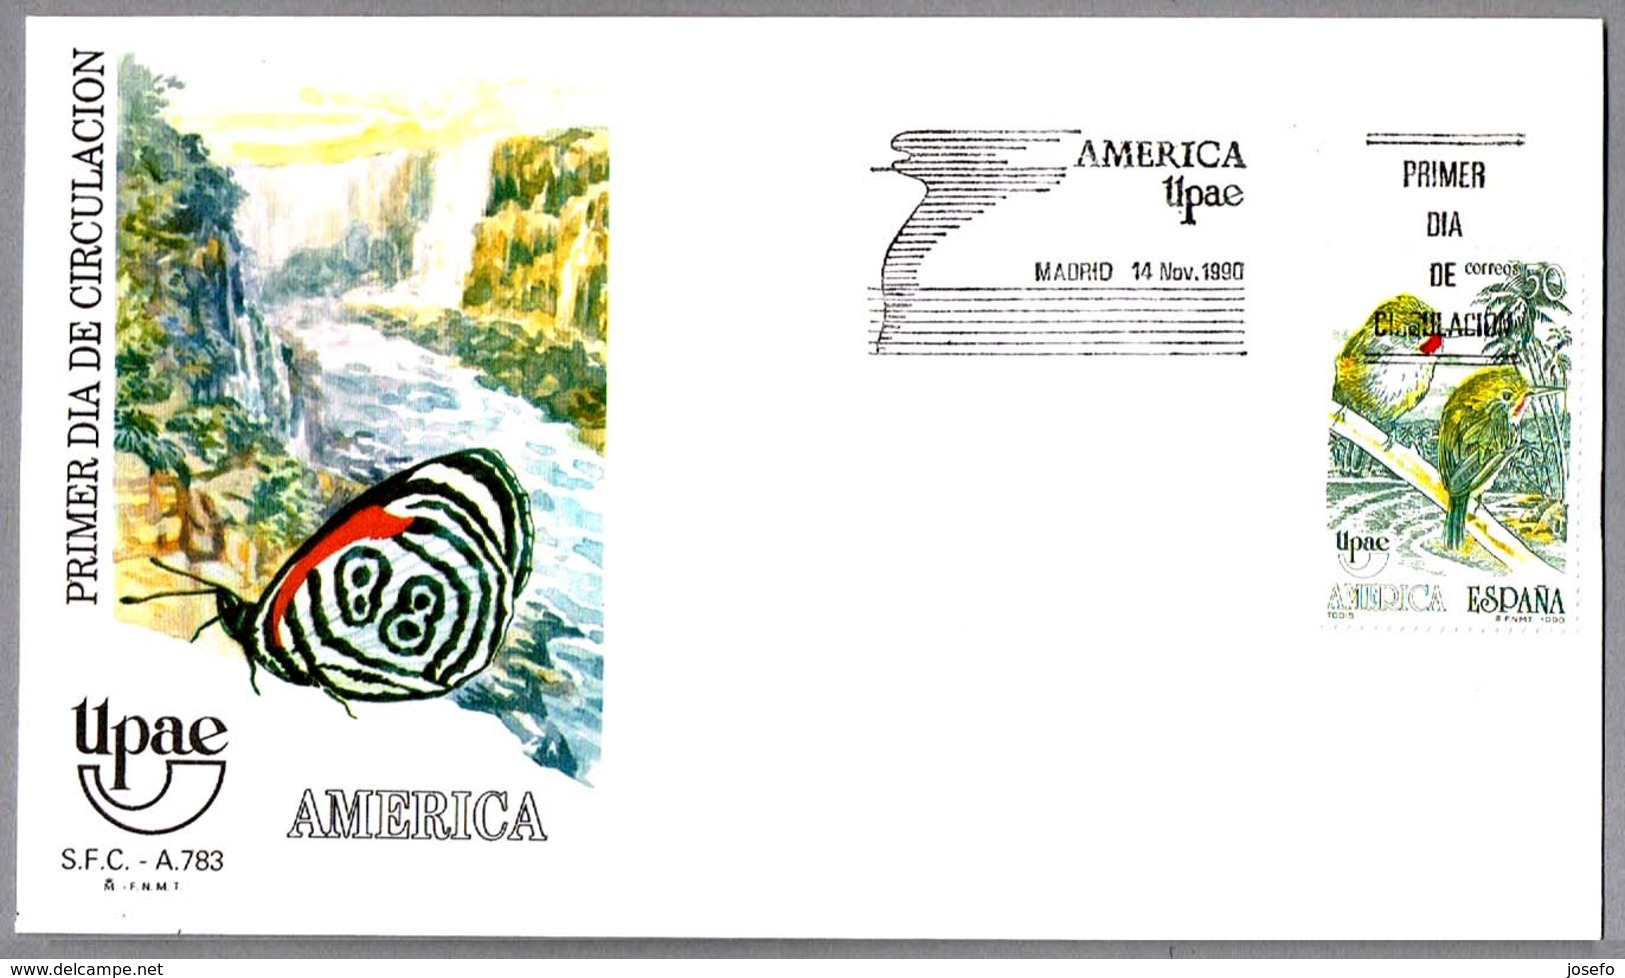 America UPAE - AVE TODIS - TODUS. FDC Madrid 1990 - Mechanical Postmarks (Advertisement)